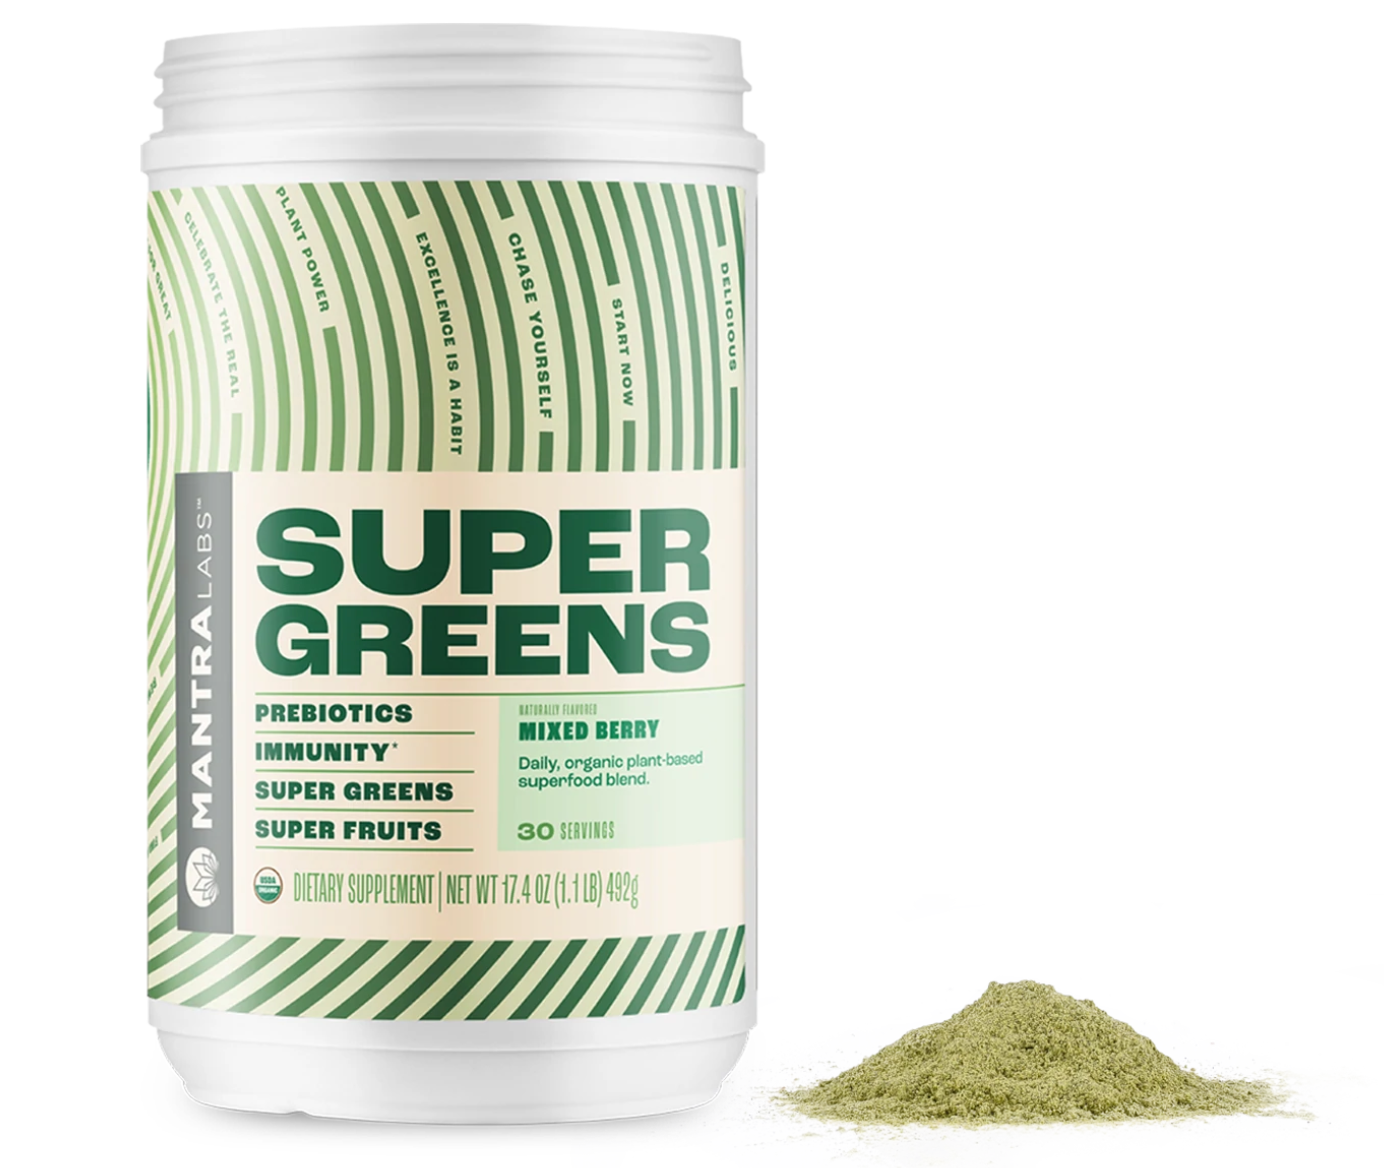 Mantra Labs Super Greens Powder